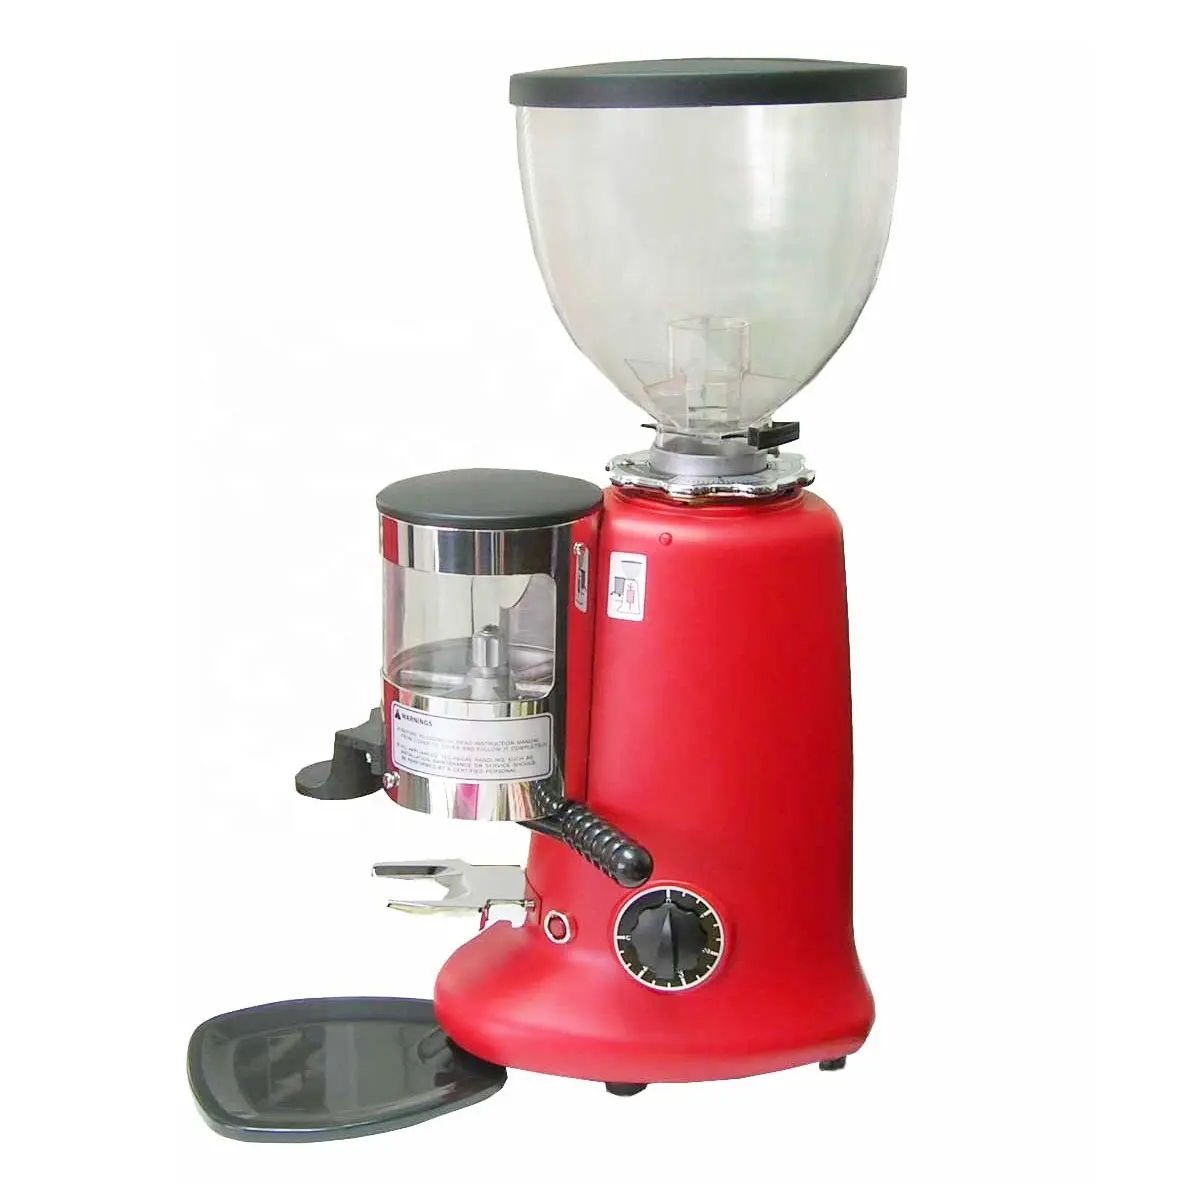 BAGF-CG11 hot sale coffee machine easy operation coffee bean grinder for coffee